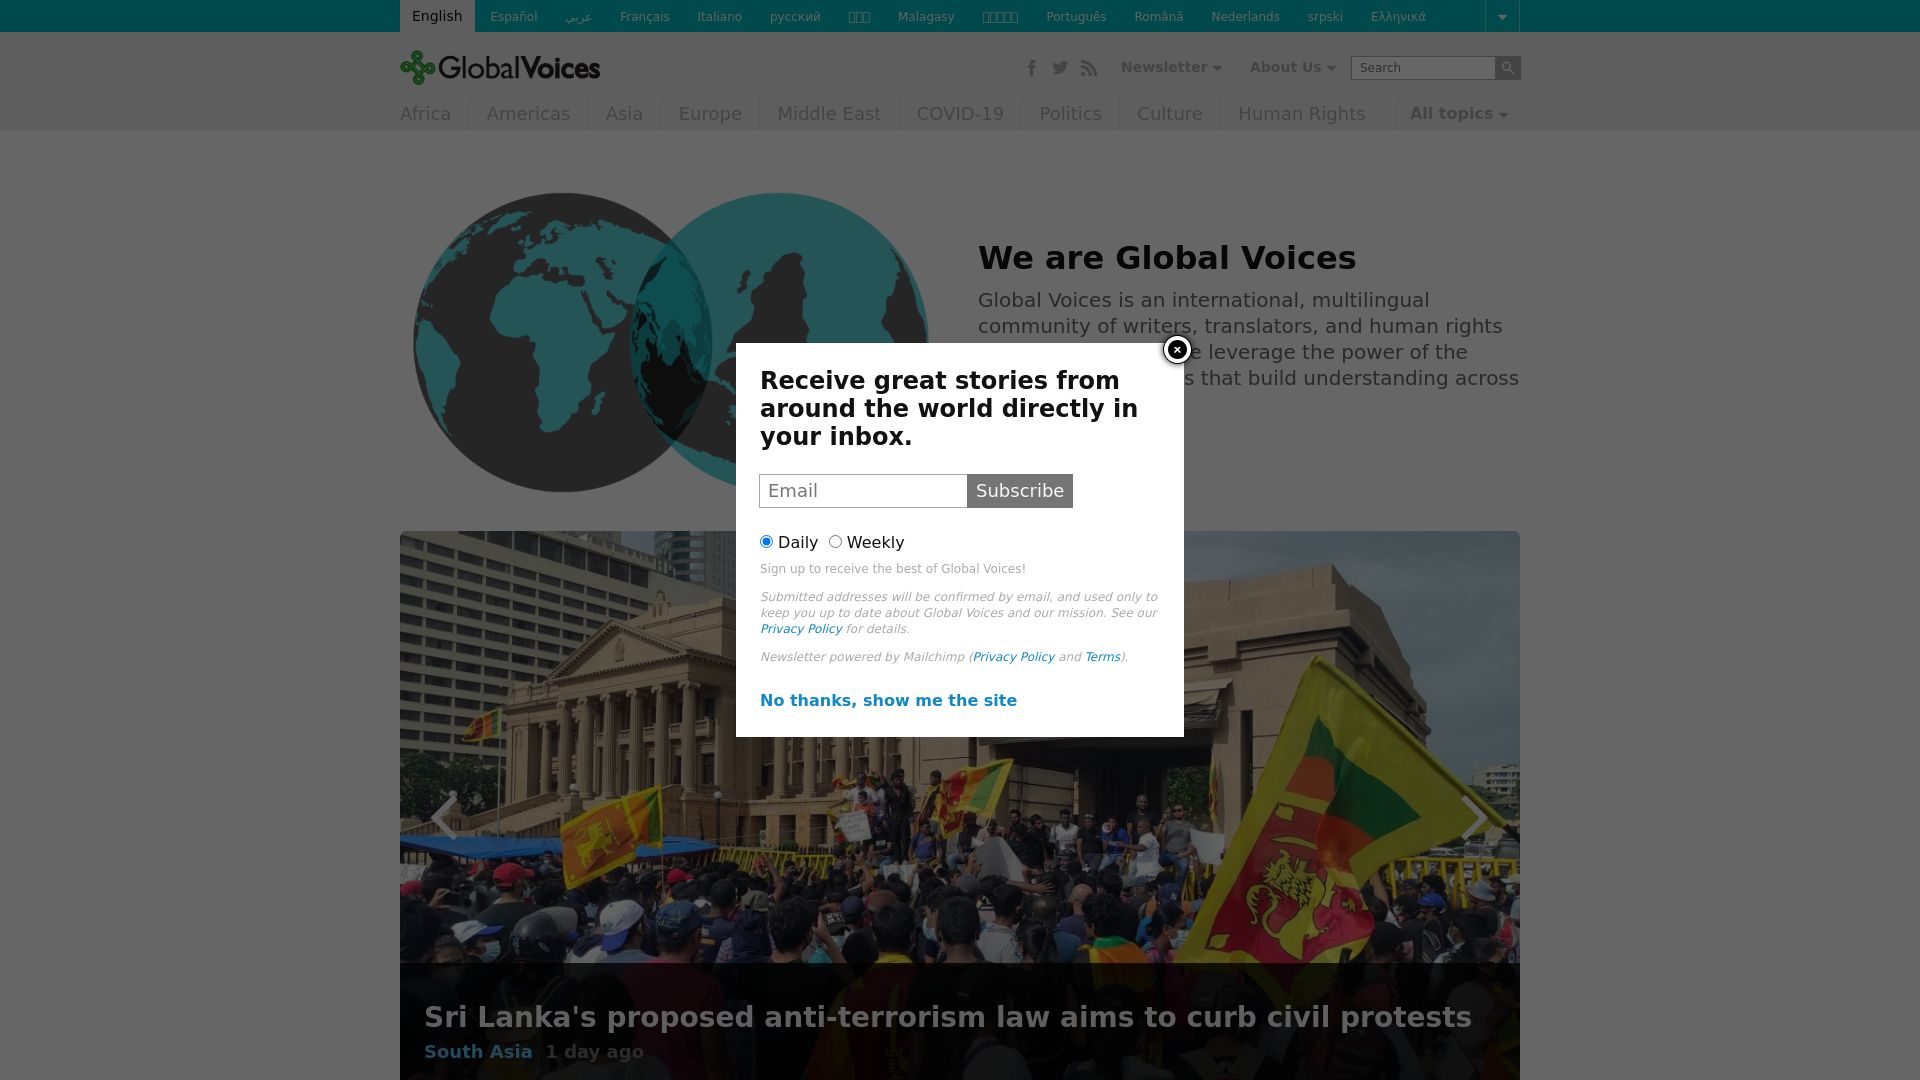 Website status globalvoices.org is   ONLINE